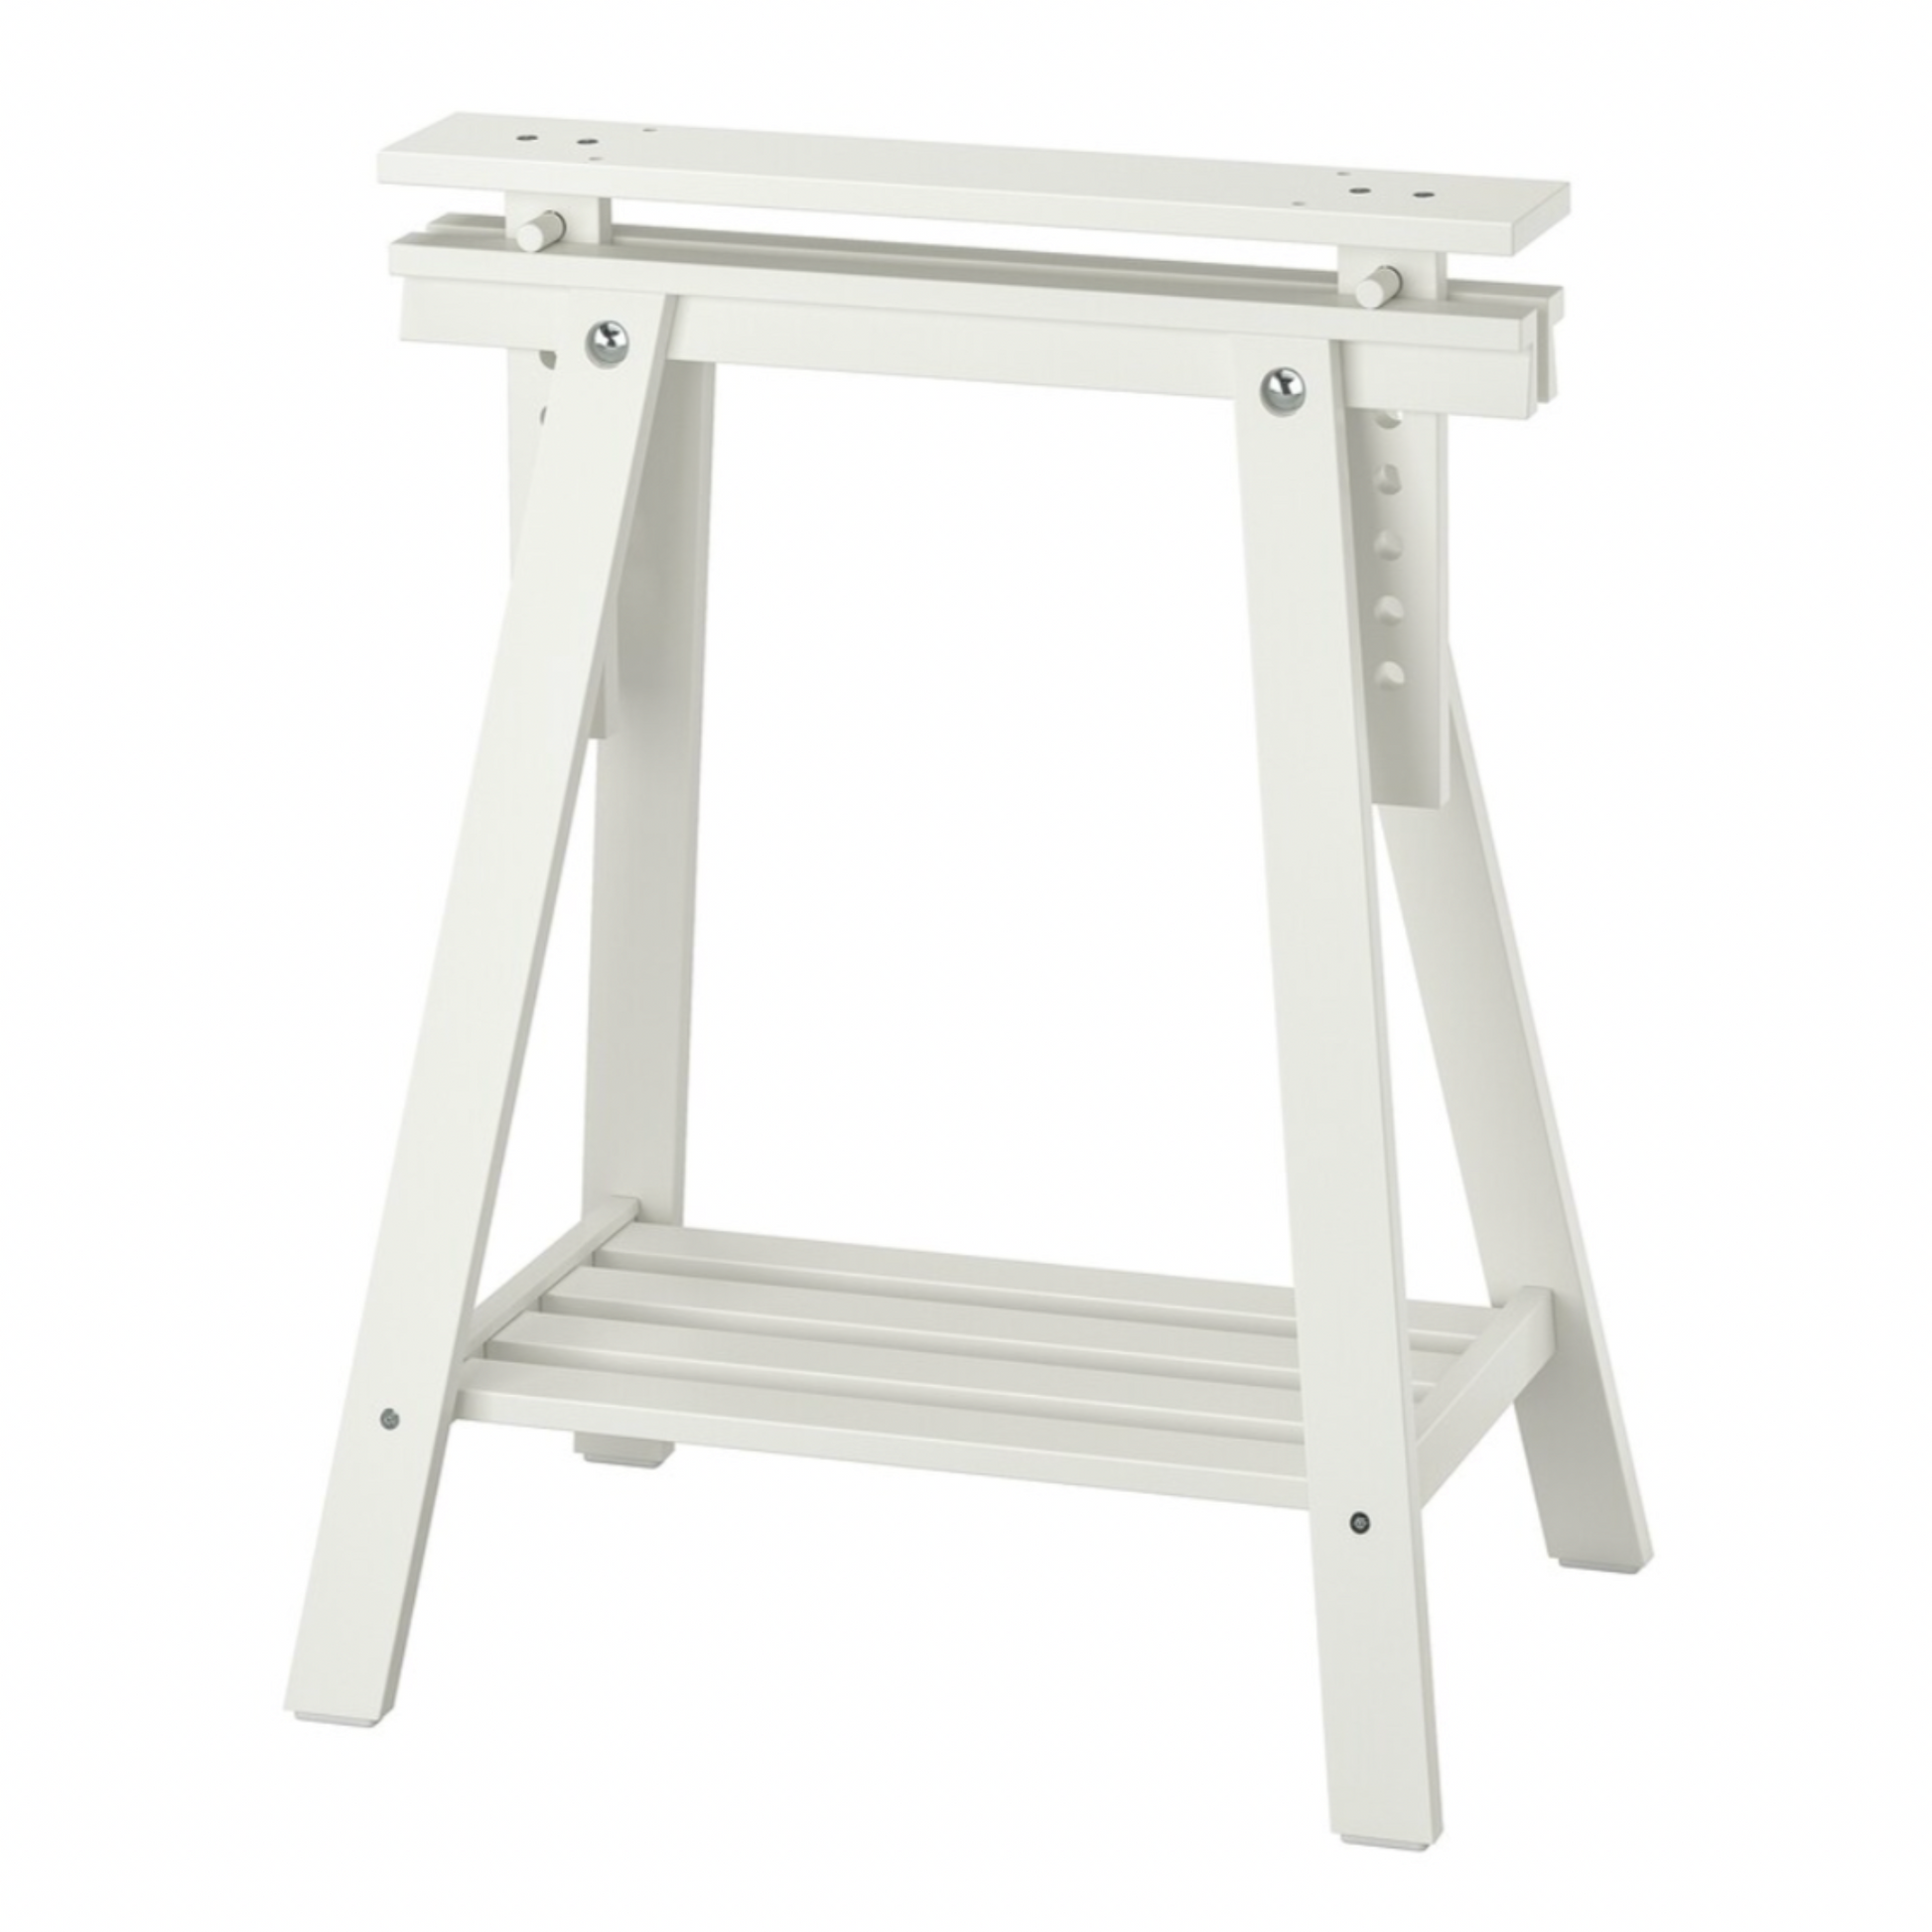 IKEA Mittback Trestle Legs x2, White (6569198223425)